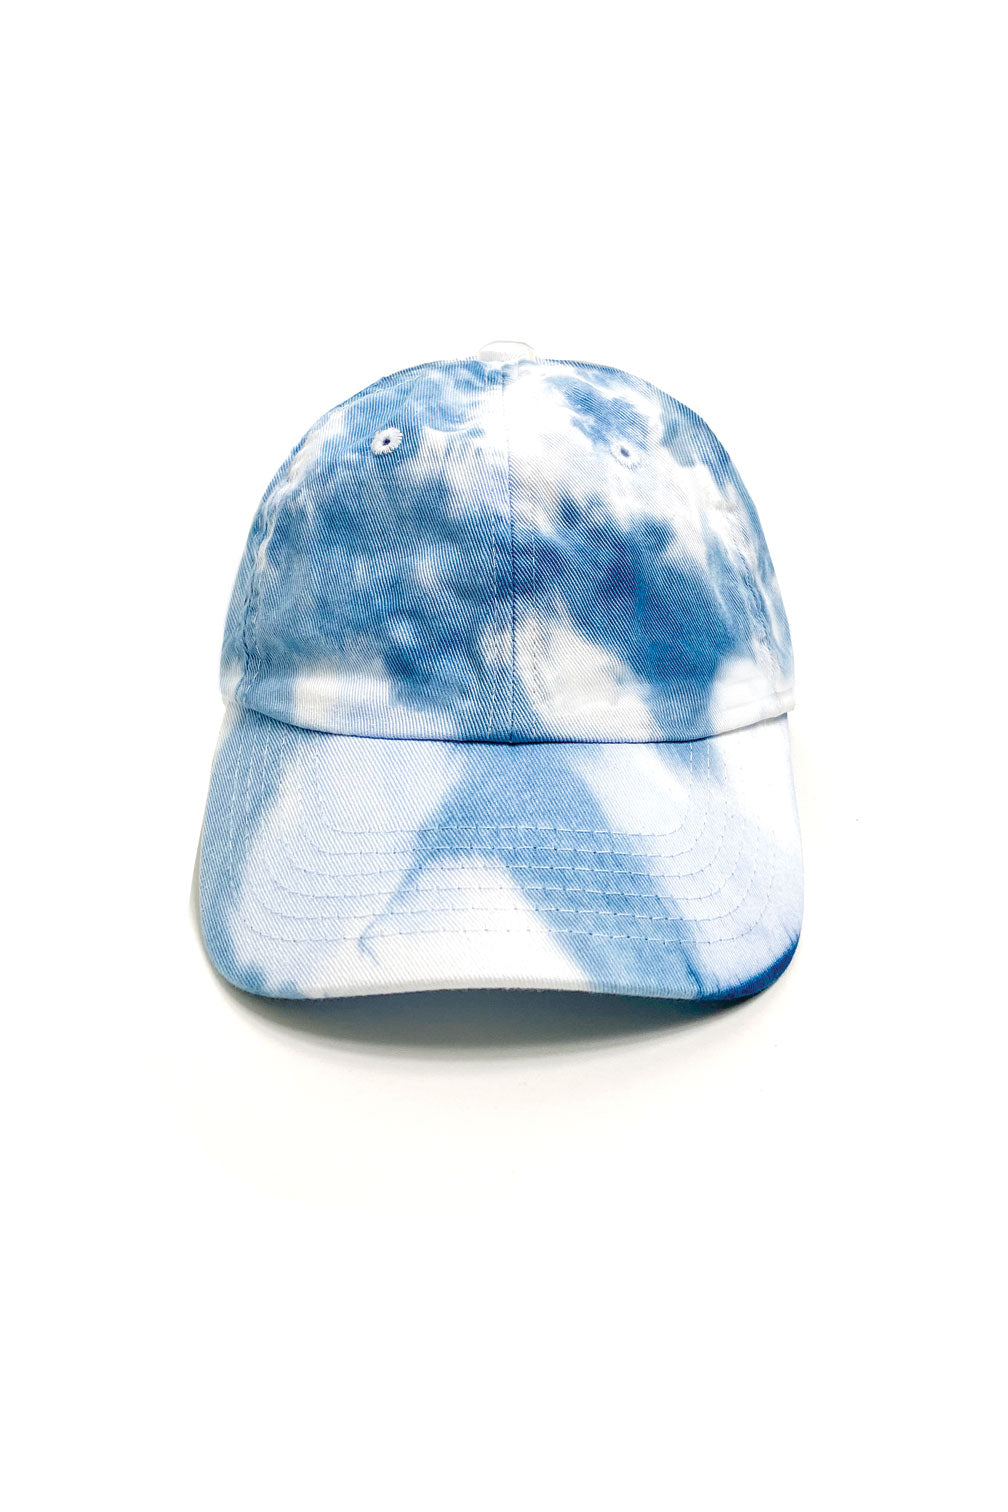 Blue Tie-Dye Baseball cap